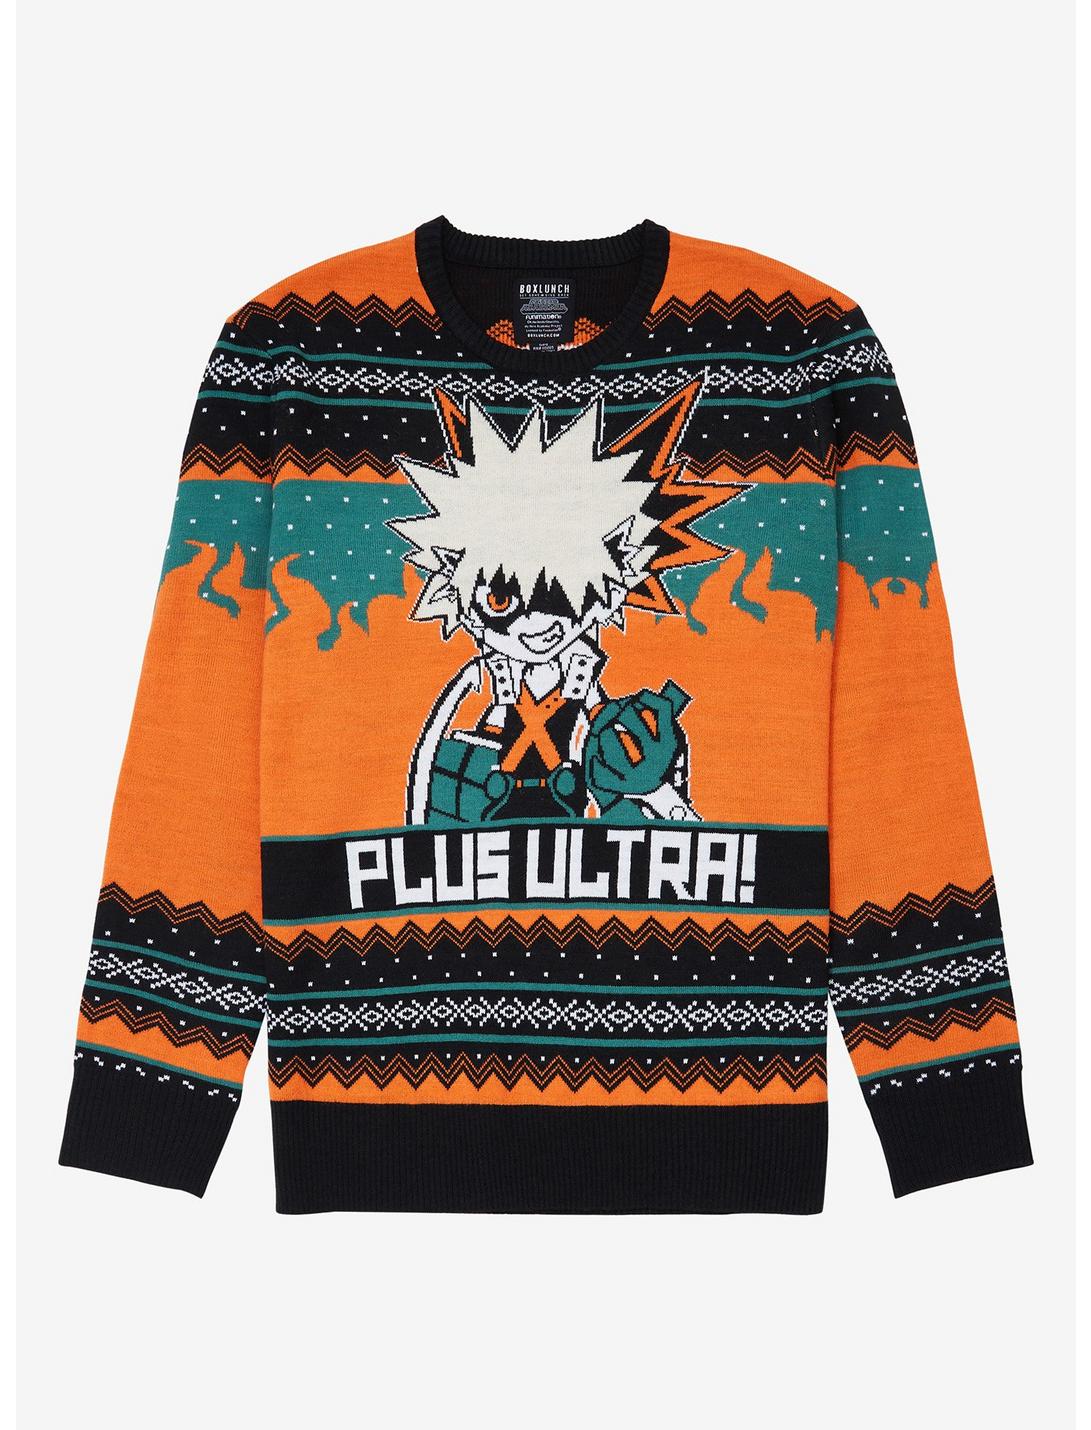 My Hero Academia Bakugo Plus Ultra Holiday Sweater - BoxLunch Exclusive, MULTI, hi-res